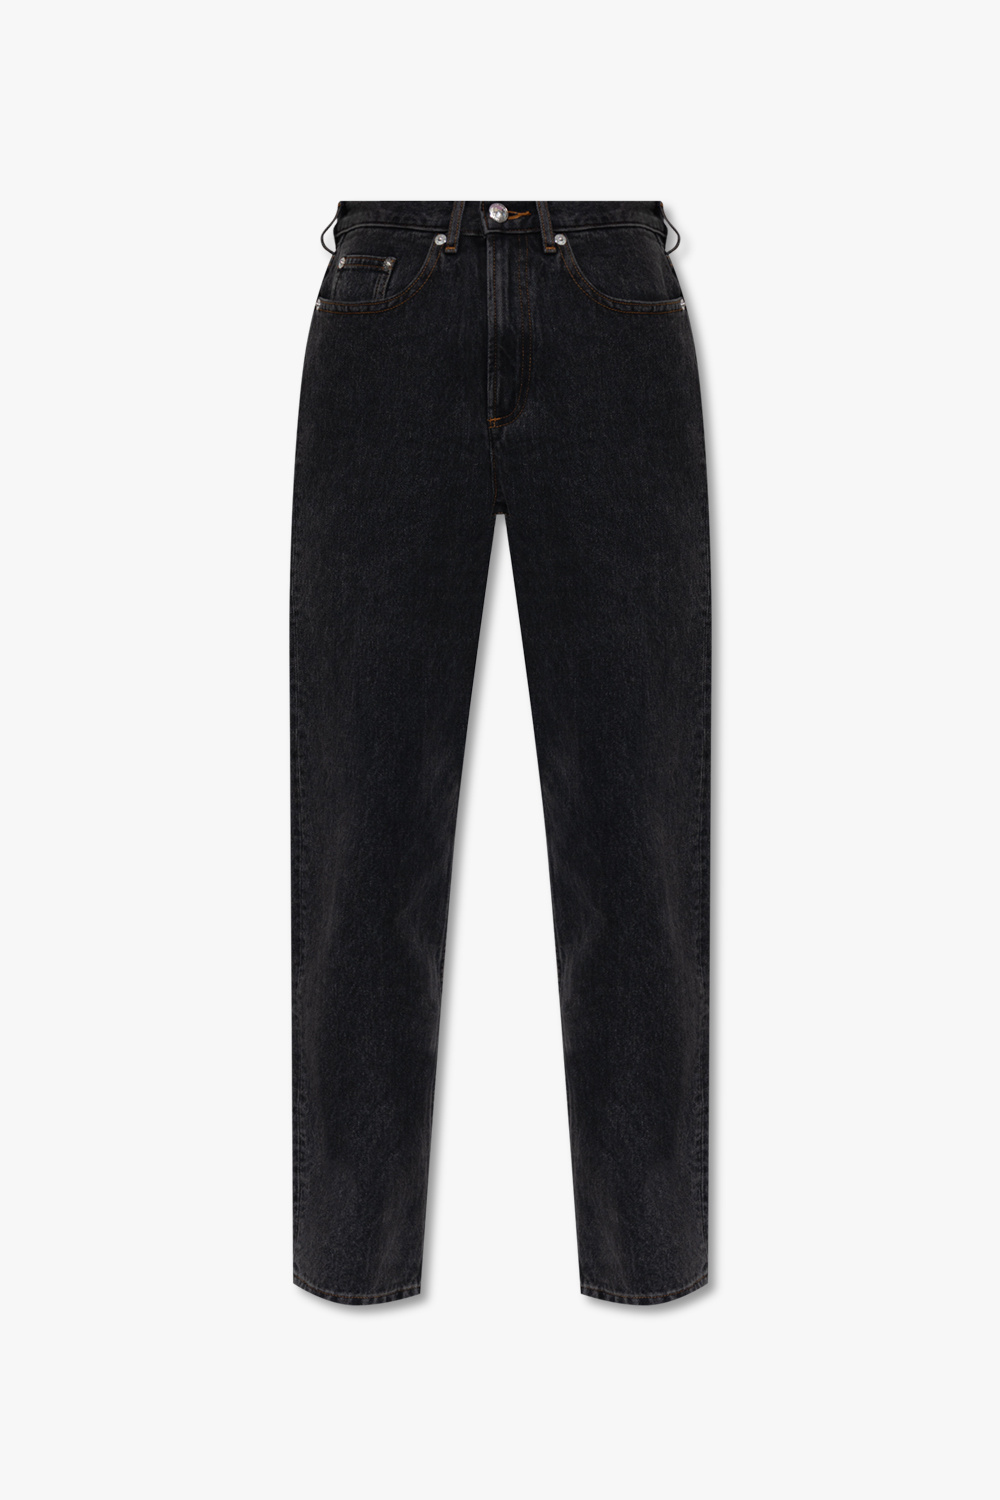 A.P.C. ‘Jean Martin’ jeans